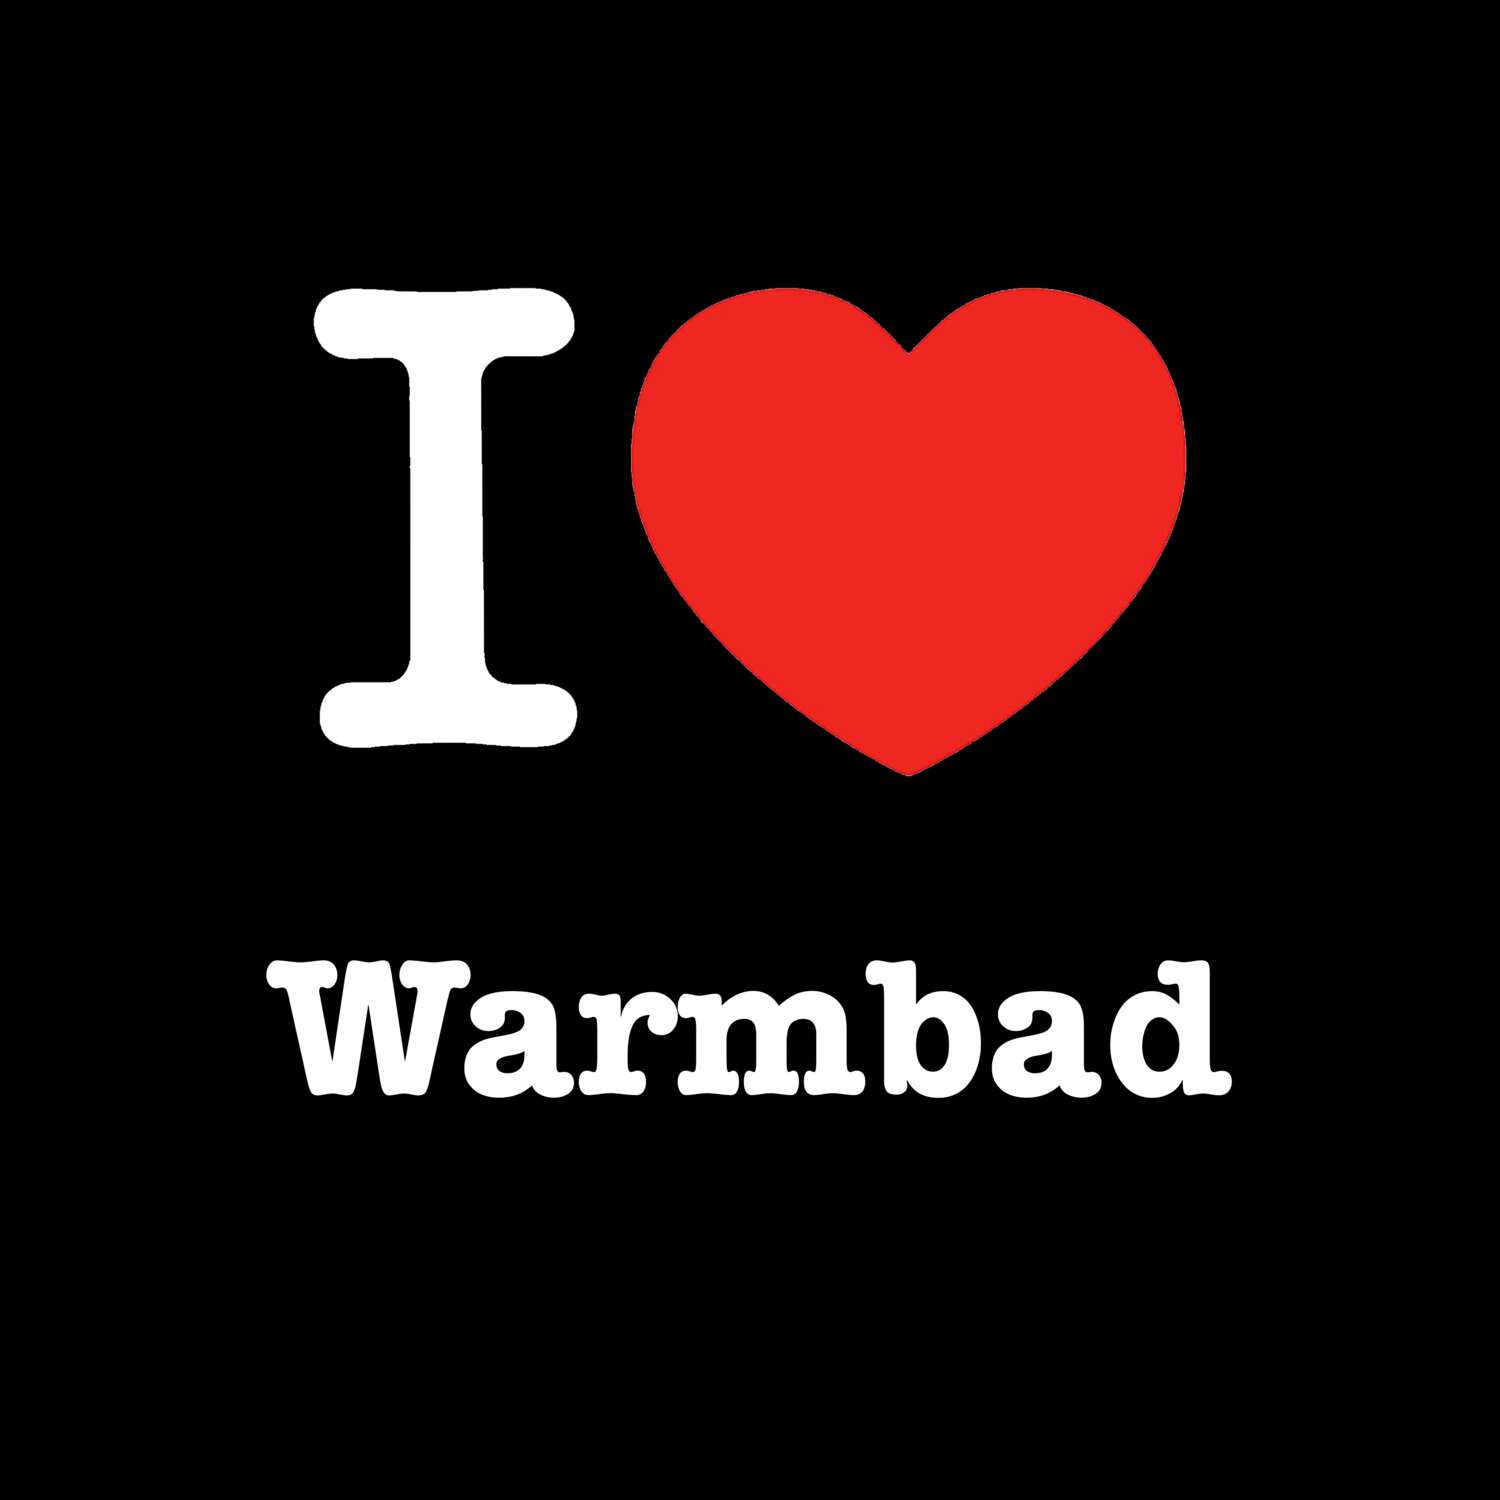 Warmbad T-Shirt »I love«